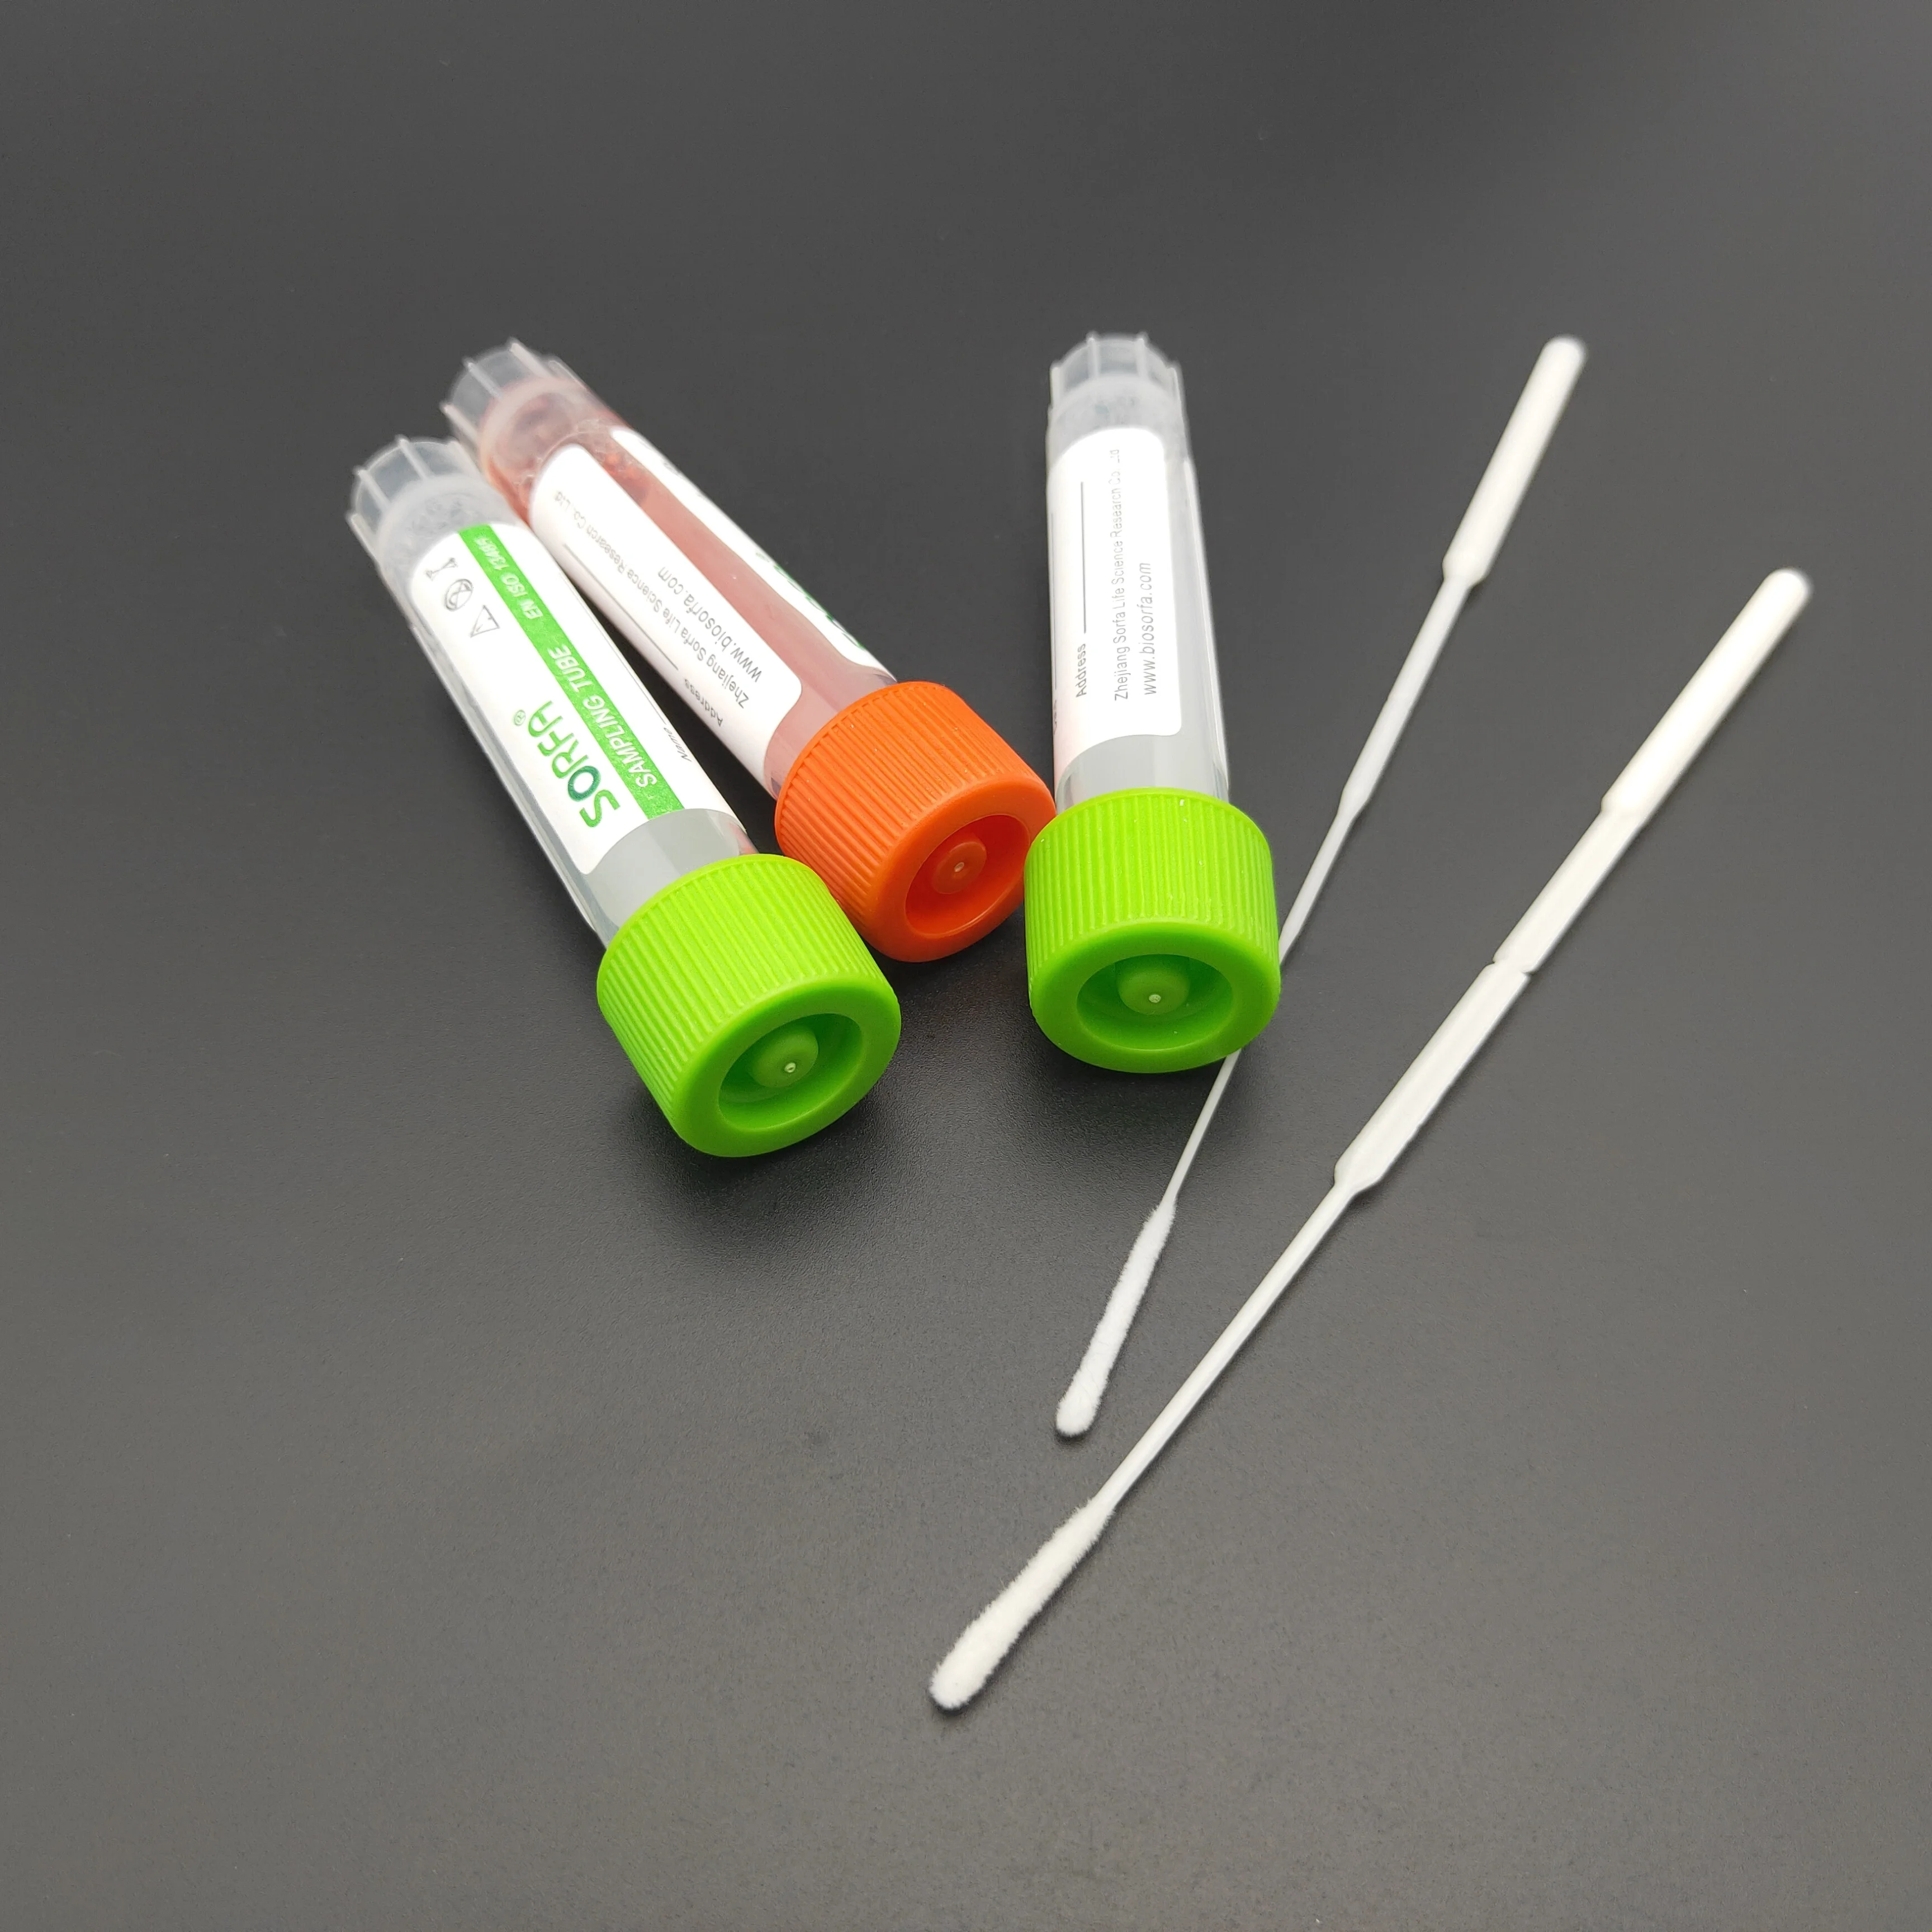 SORFA 2.5ml disposable specimen collection tube vtm kit swab lab medical sampling tube